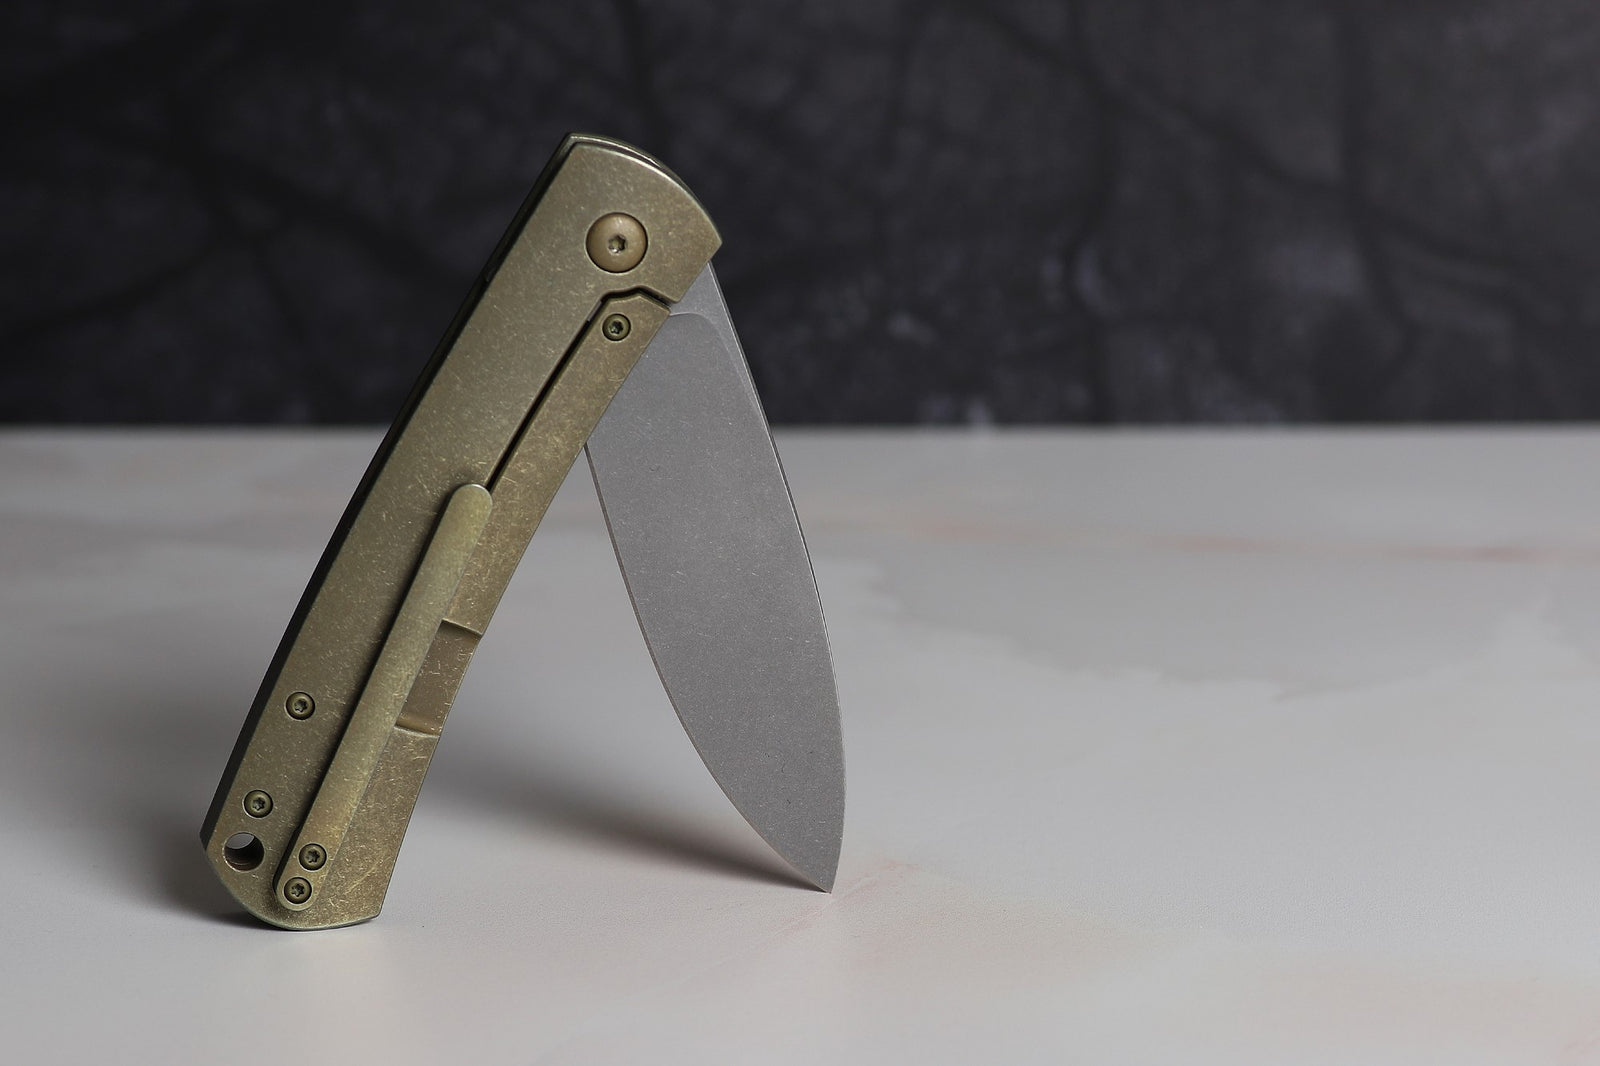 Kaviso x Laconico Keen CPM S35VN Folding Pocket Knife with Titanium Frame Lock with Flipper Tab Deployment